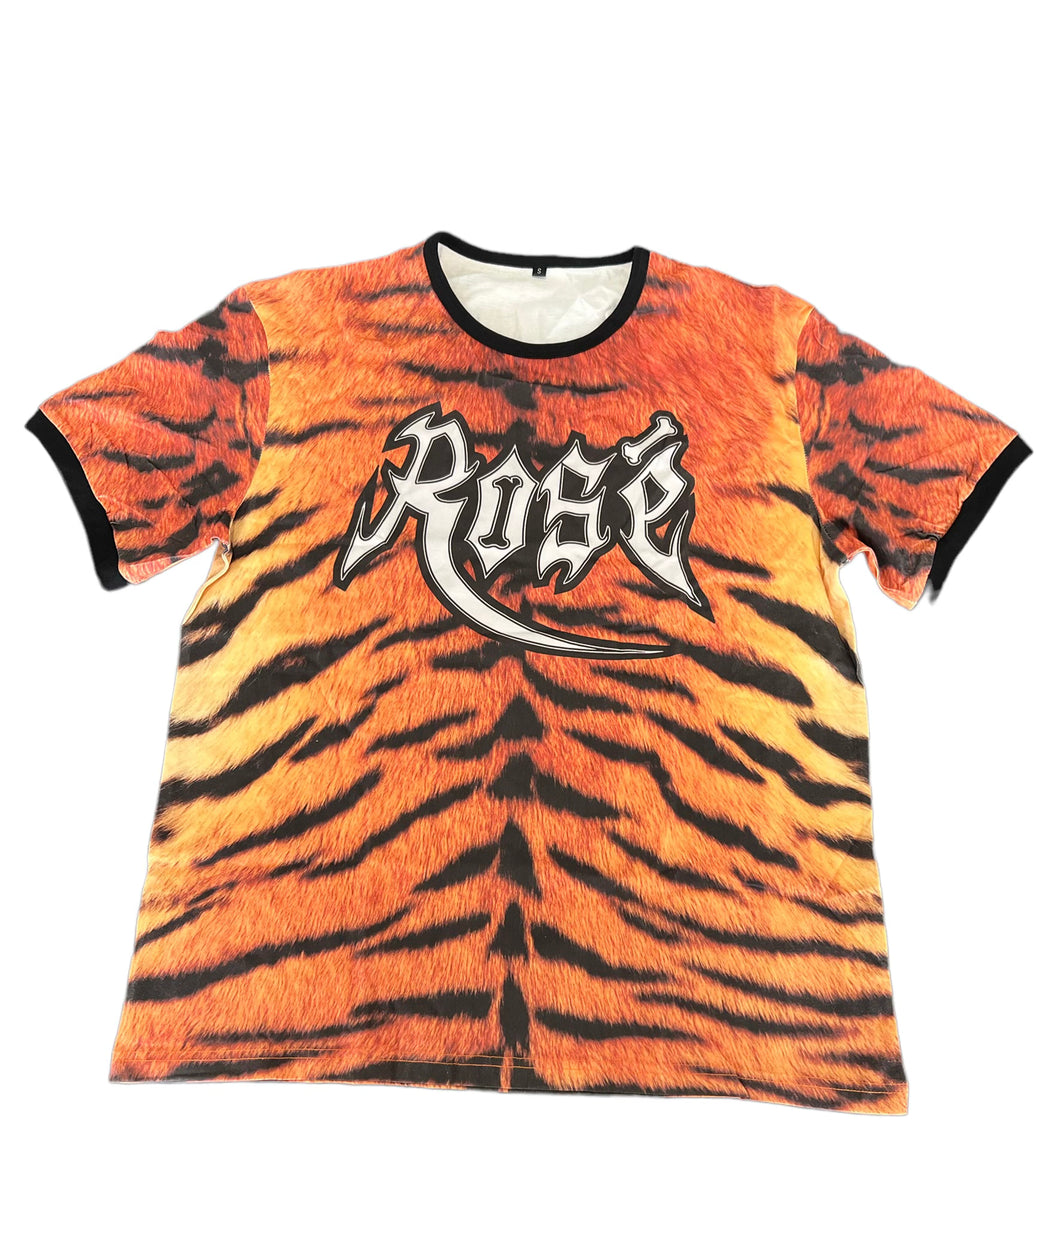 End of World Tiger Print Shirt